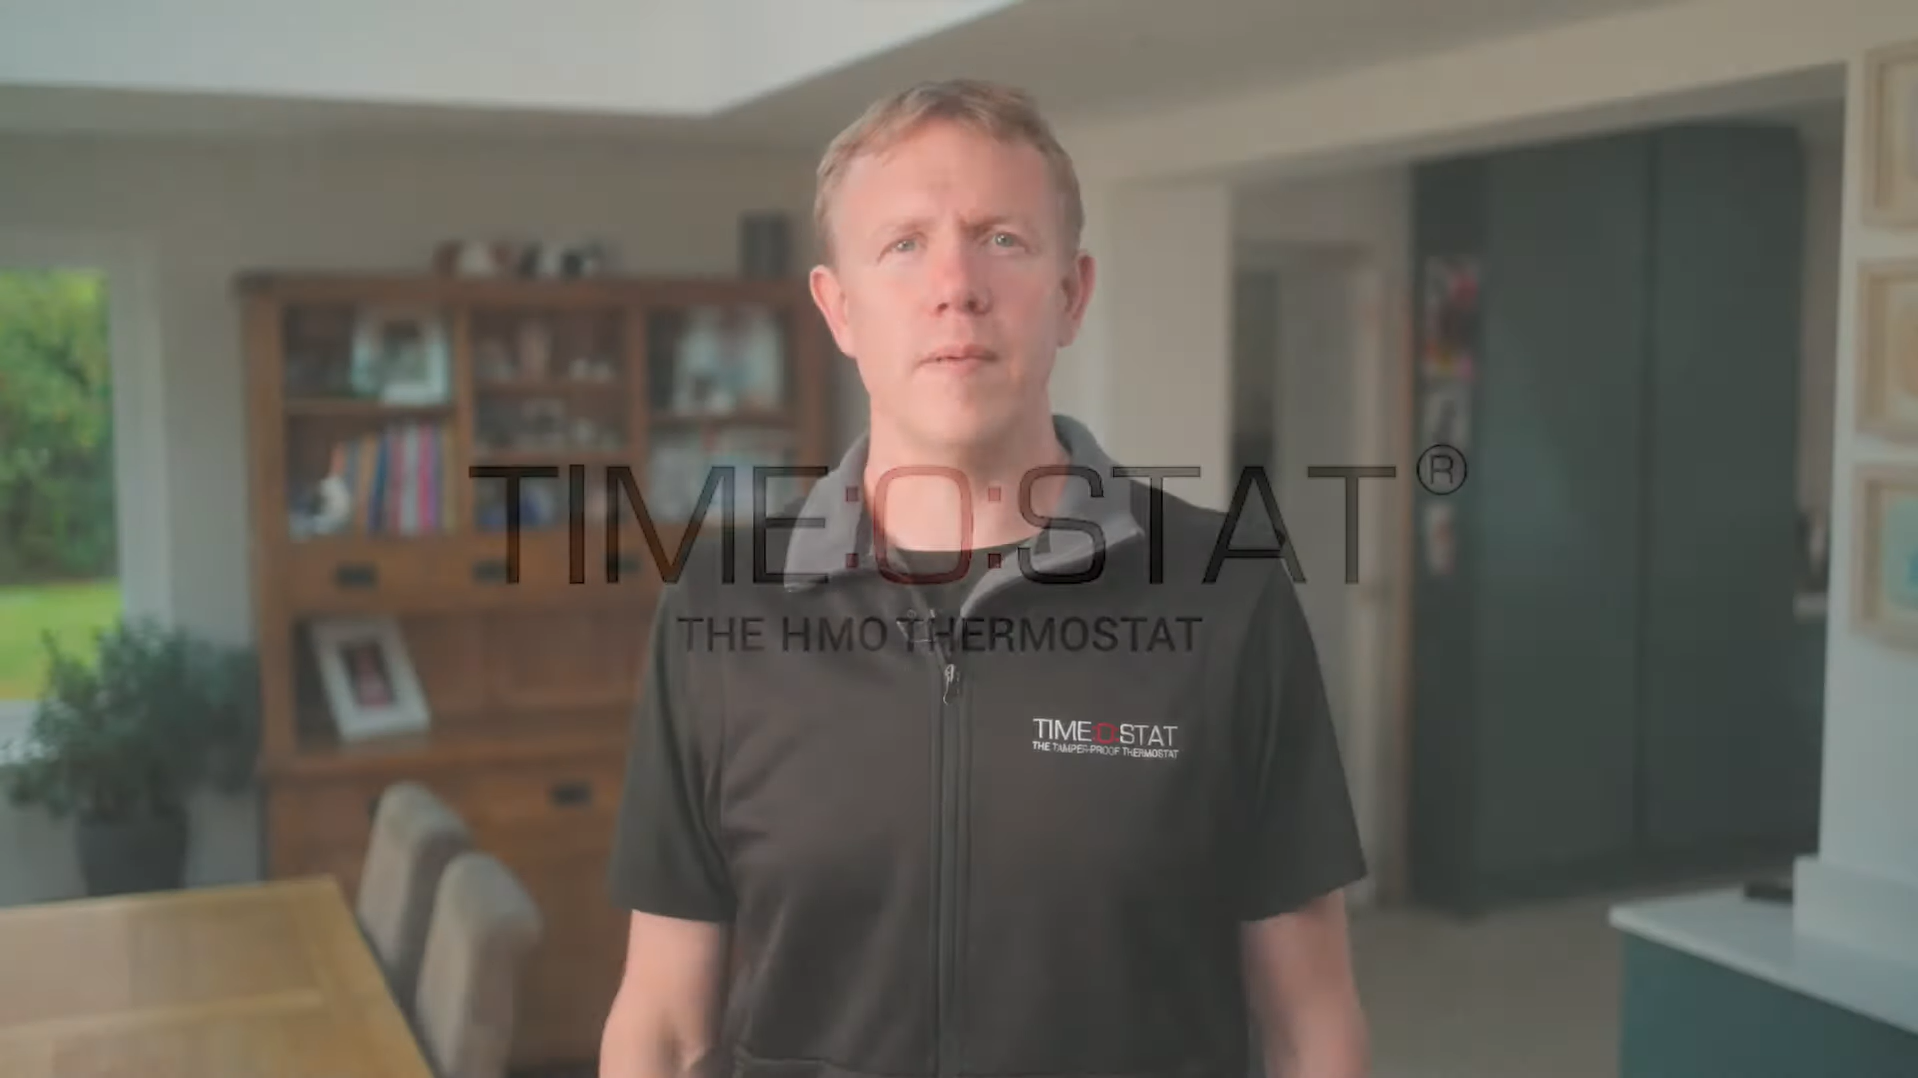 timeostat hmo landlord thermostat video